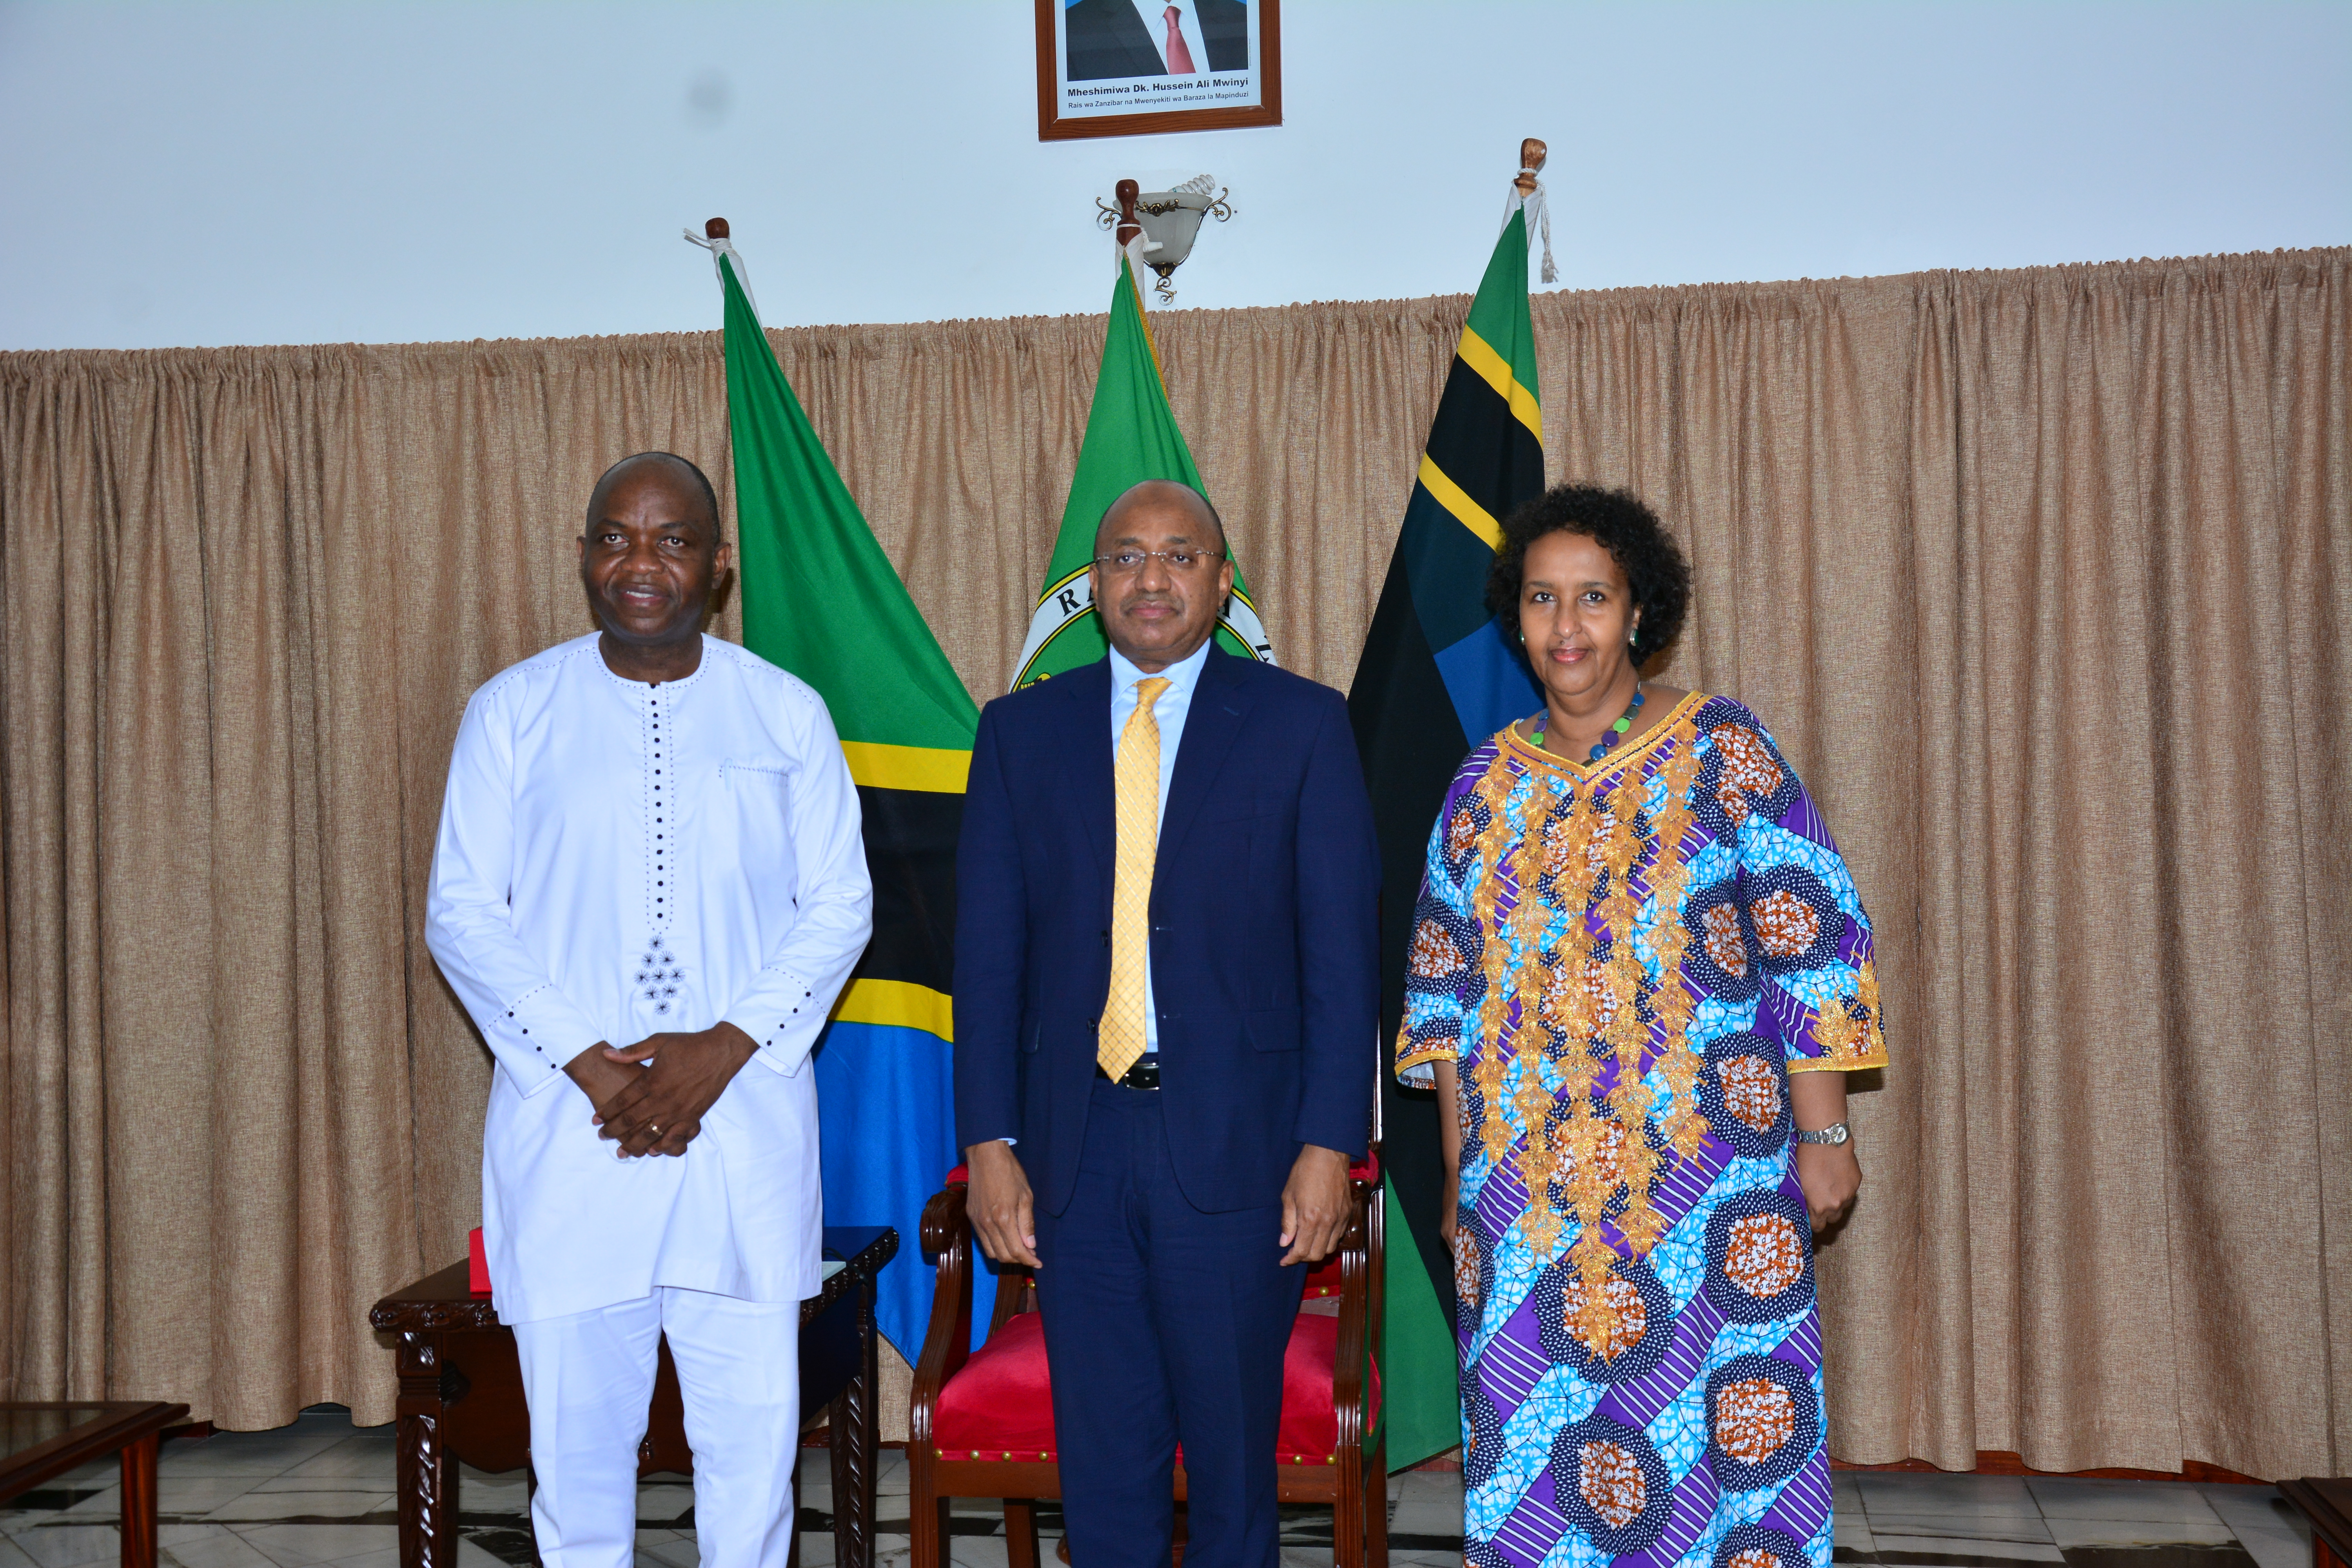 Dr. Maxime with the president of Zanzibar and UN representative